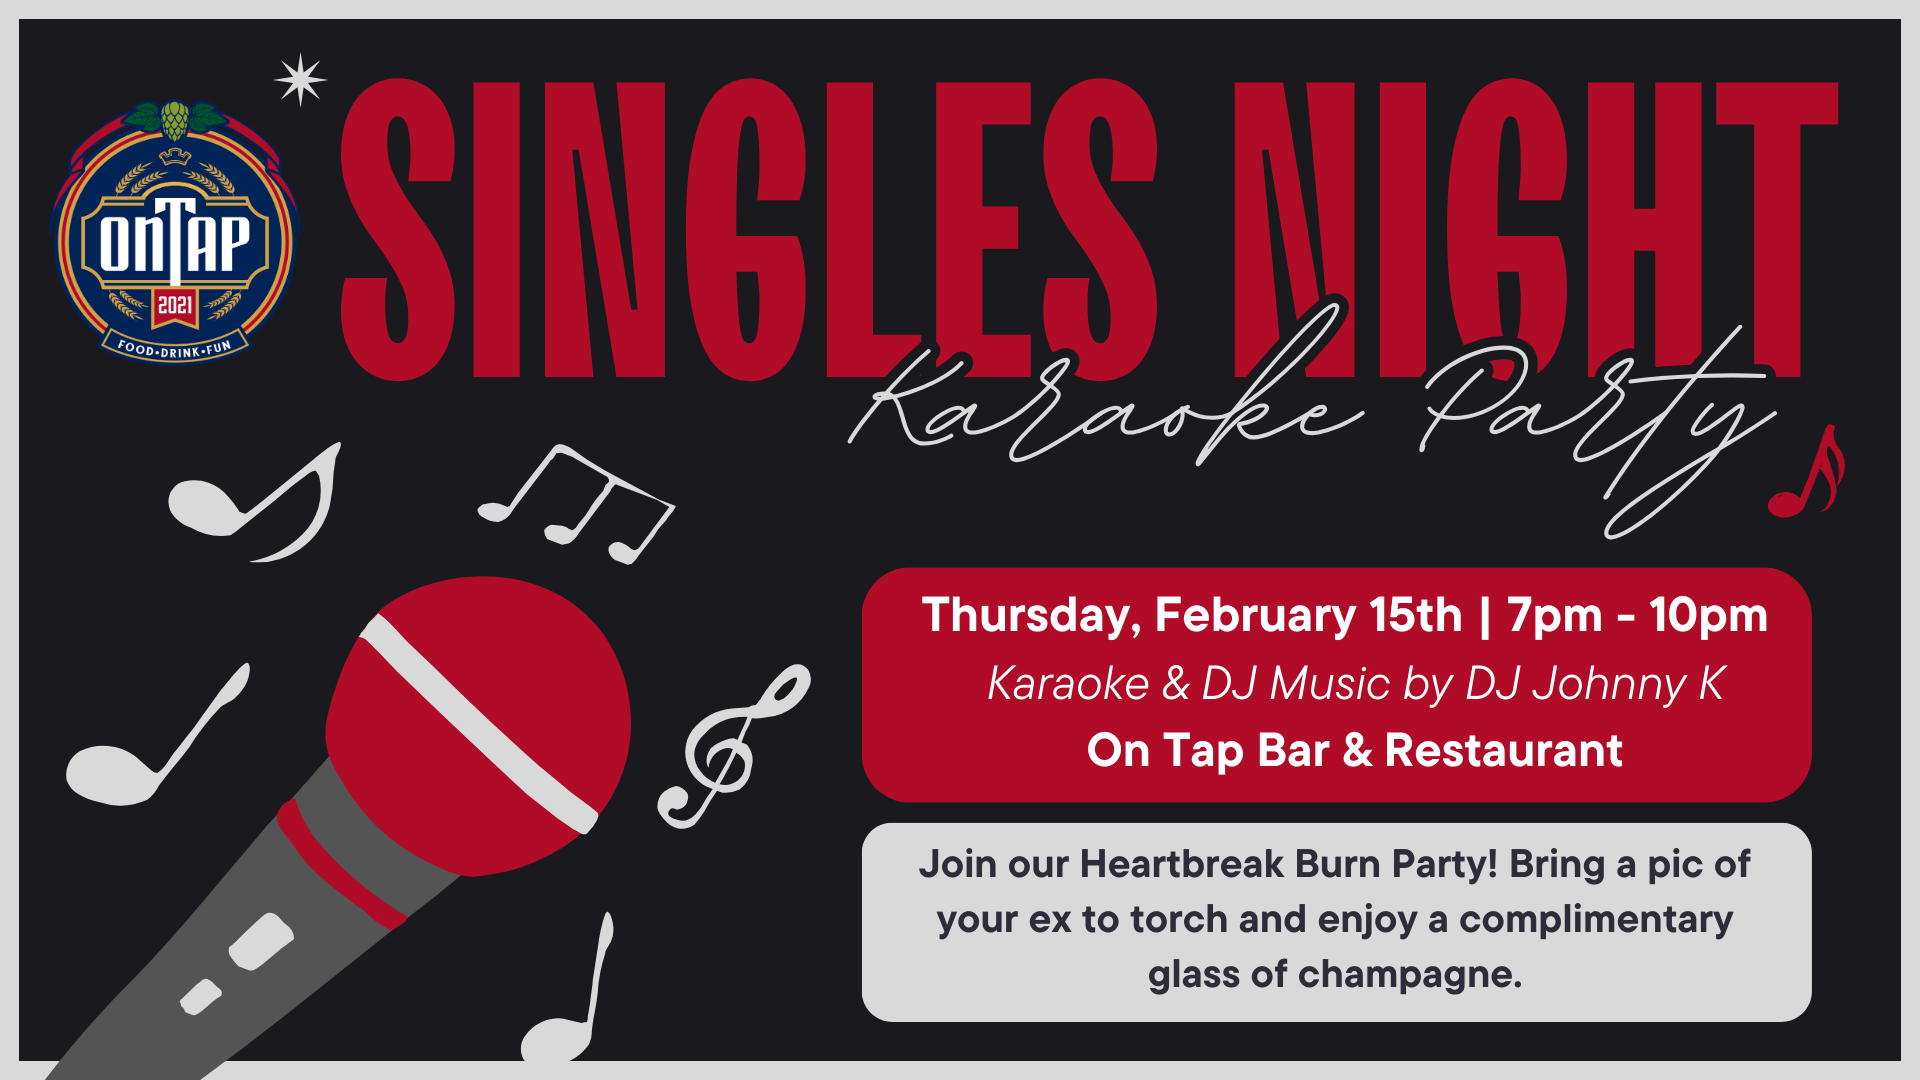 Singles Night Karaoke Party at On Tap